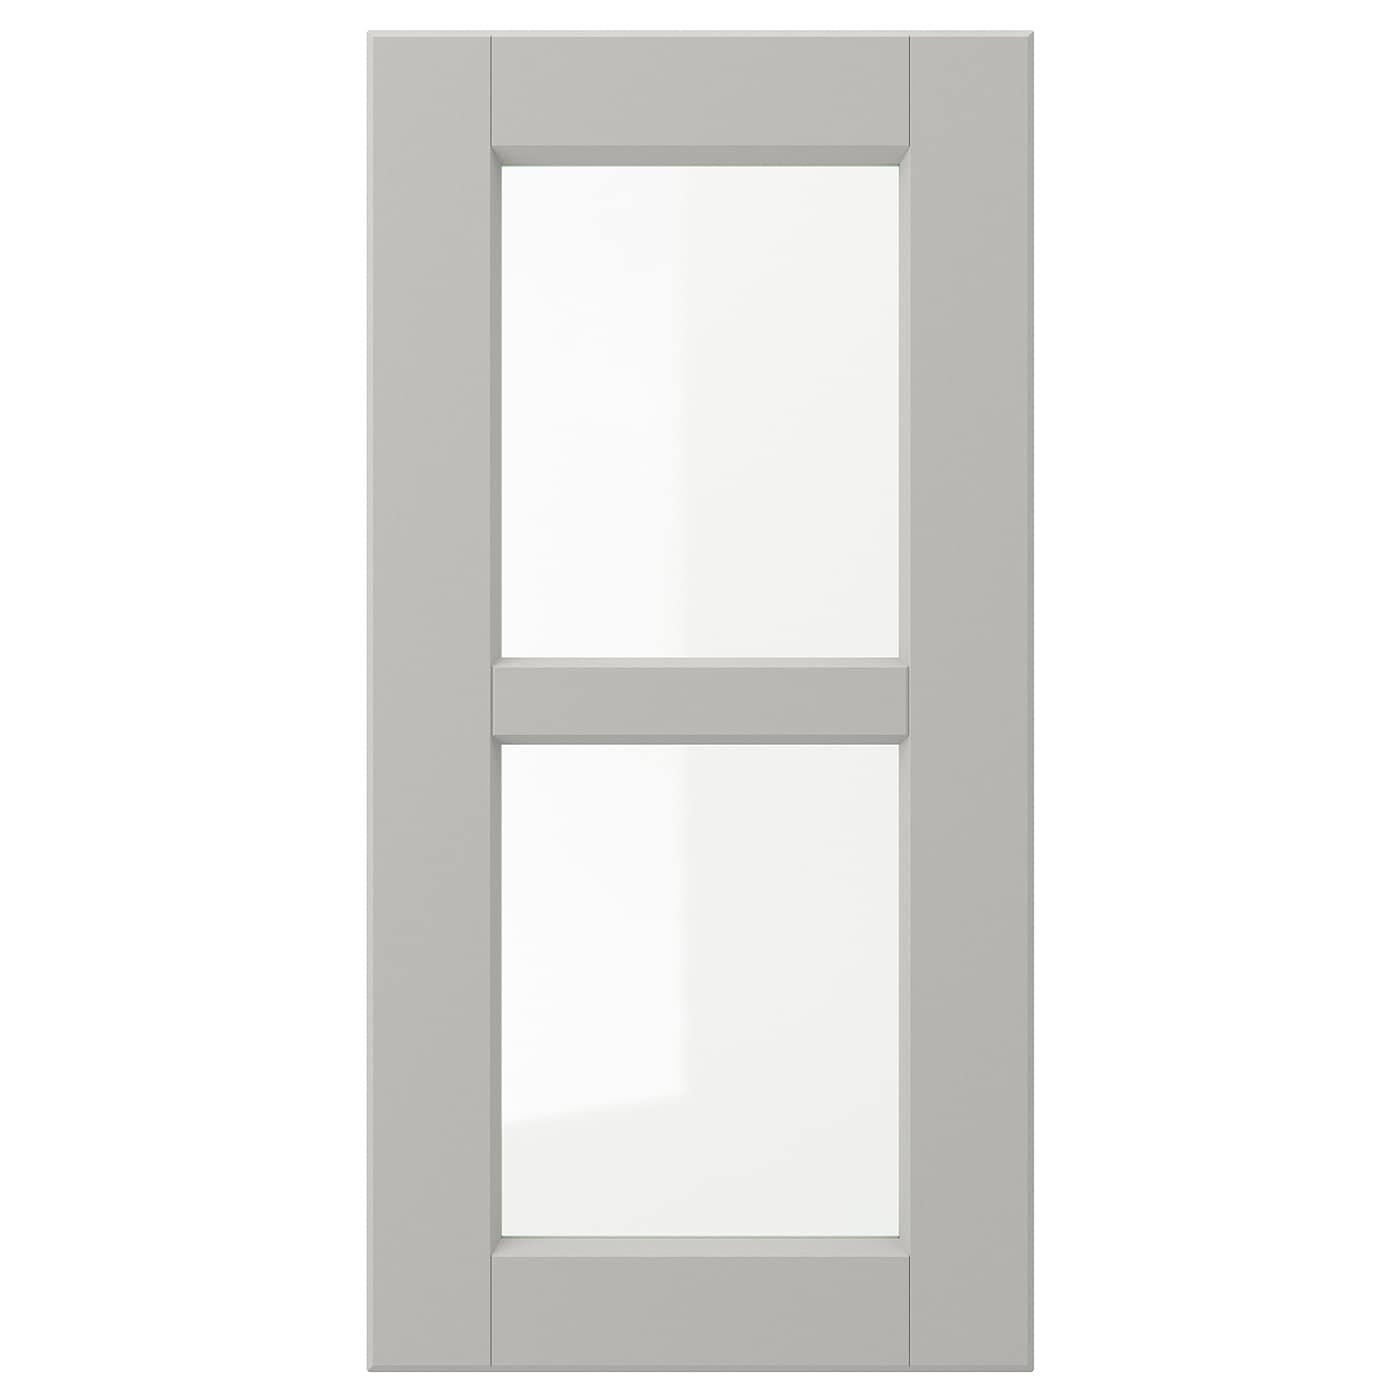 Дверца со стеклом - IKEA LERHYTTAN, 60х30 см, светло-серый, ЛЕРХЮТТАН ИКЕА